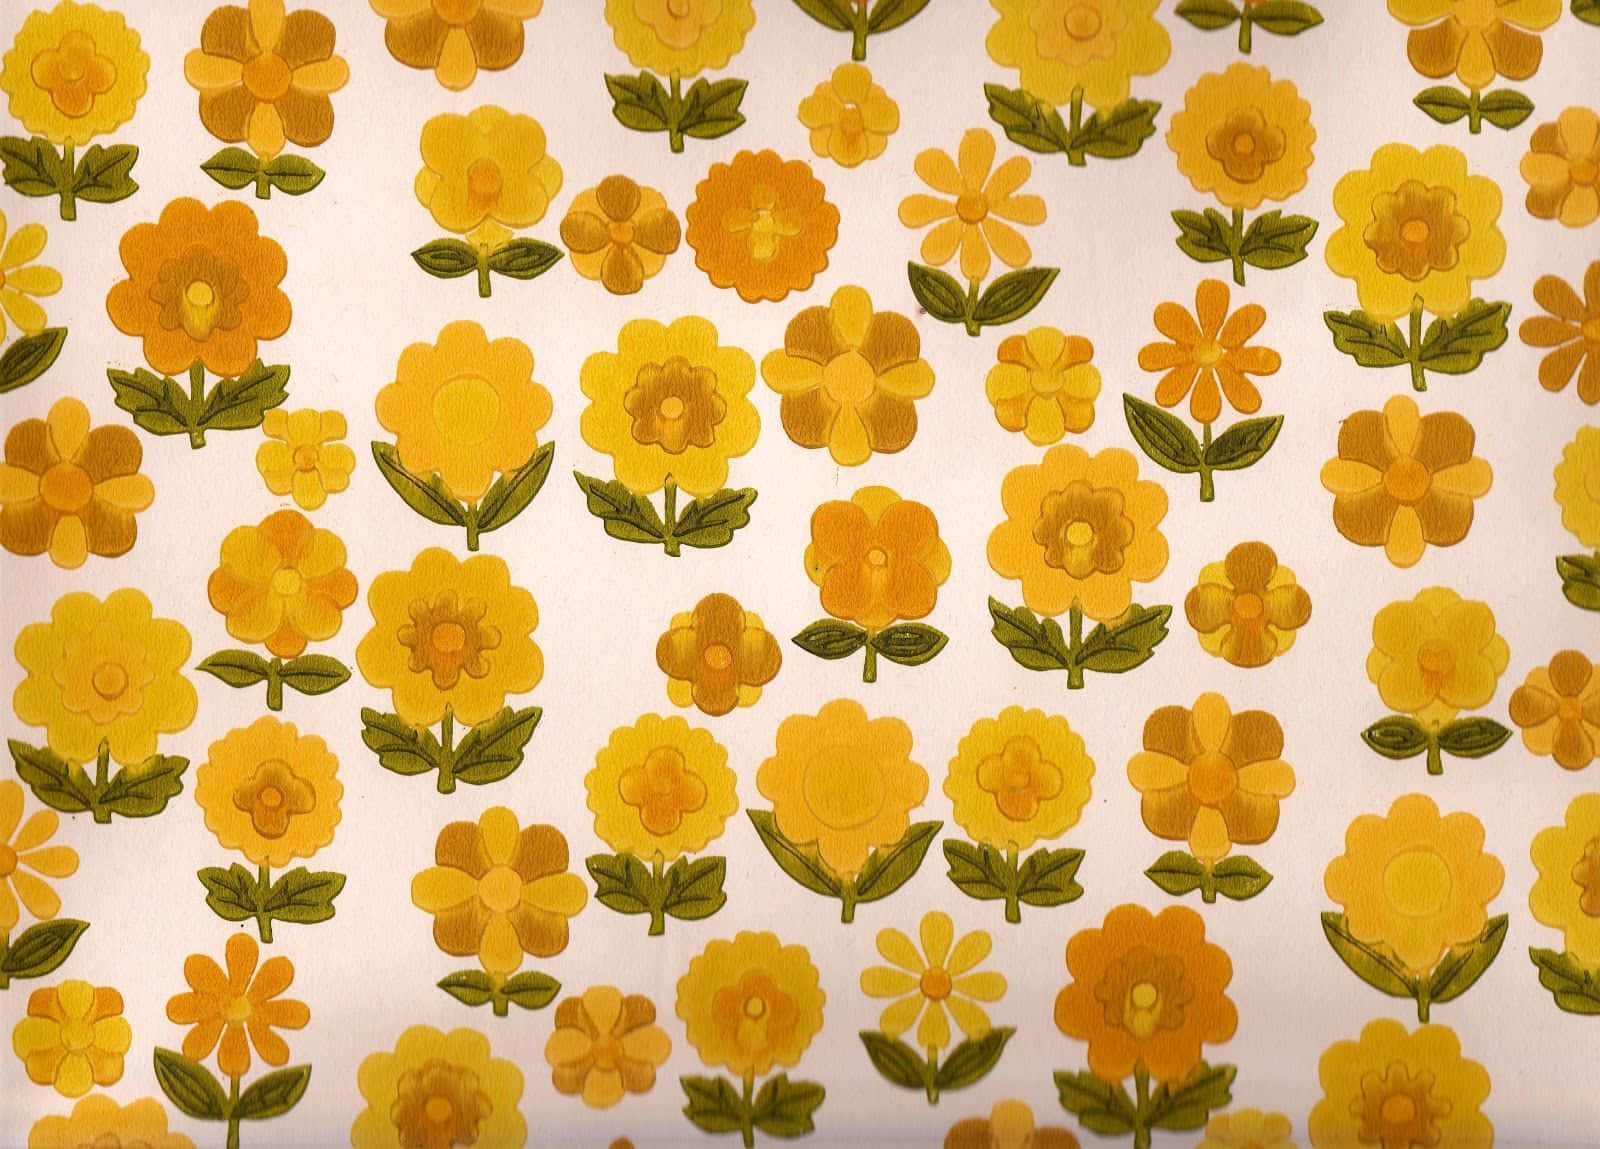 Floral Retro Style 70s Aesthetic Desktop Wallpaper